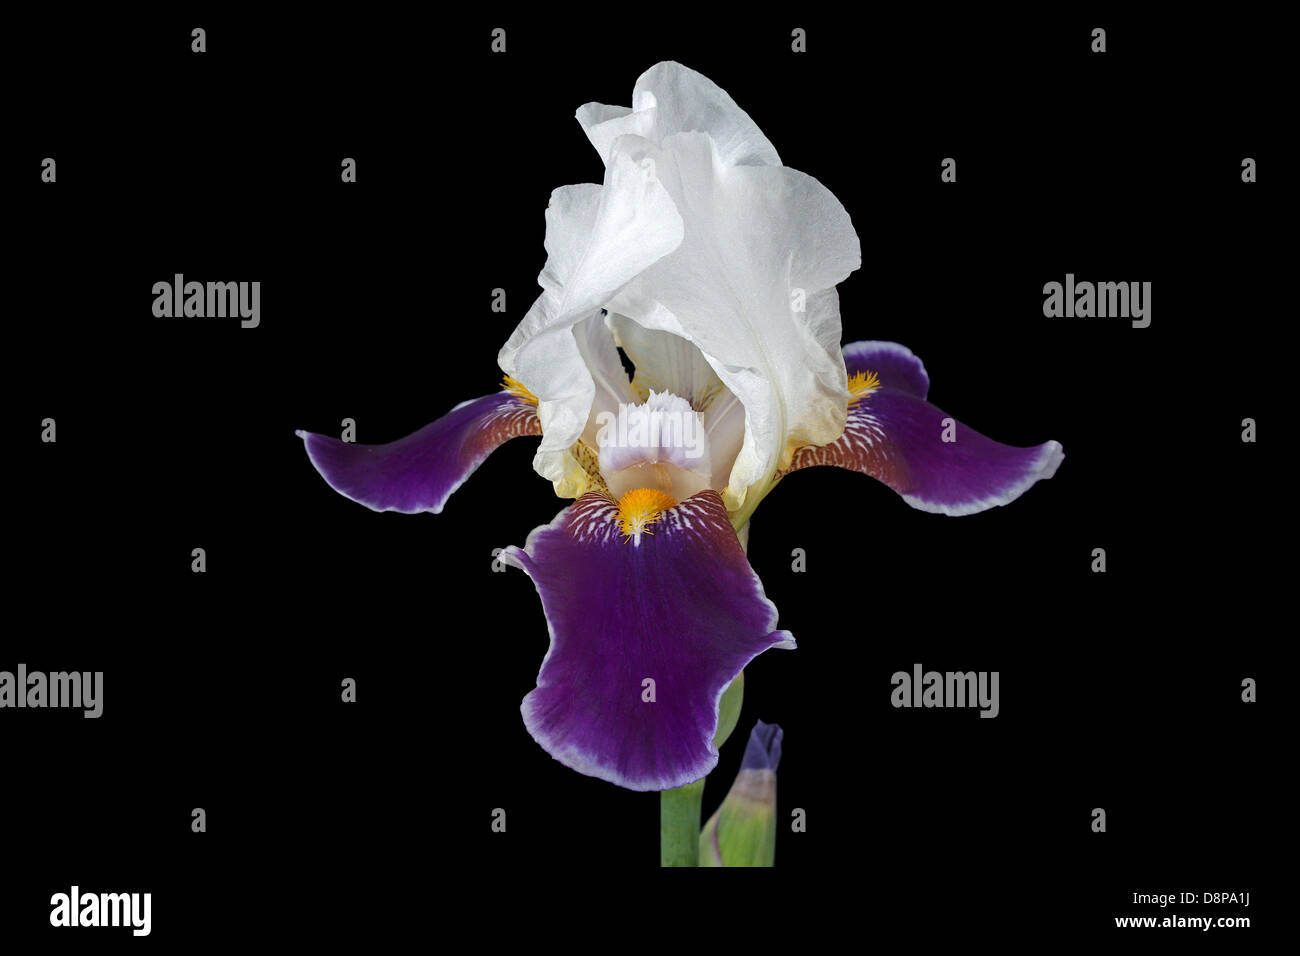 Flower of iris, lat. Iris, isolated on black backgrounds Stock Photo